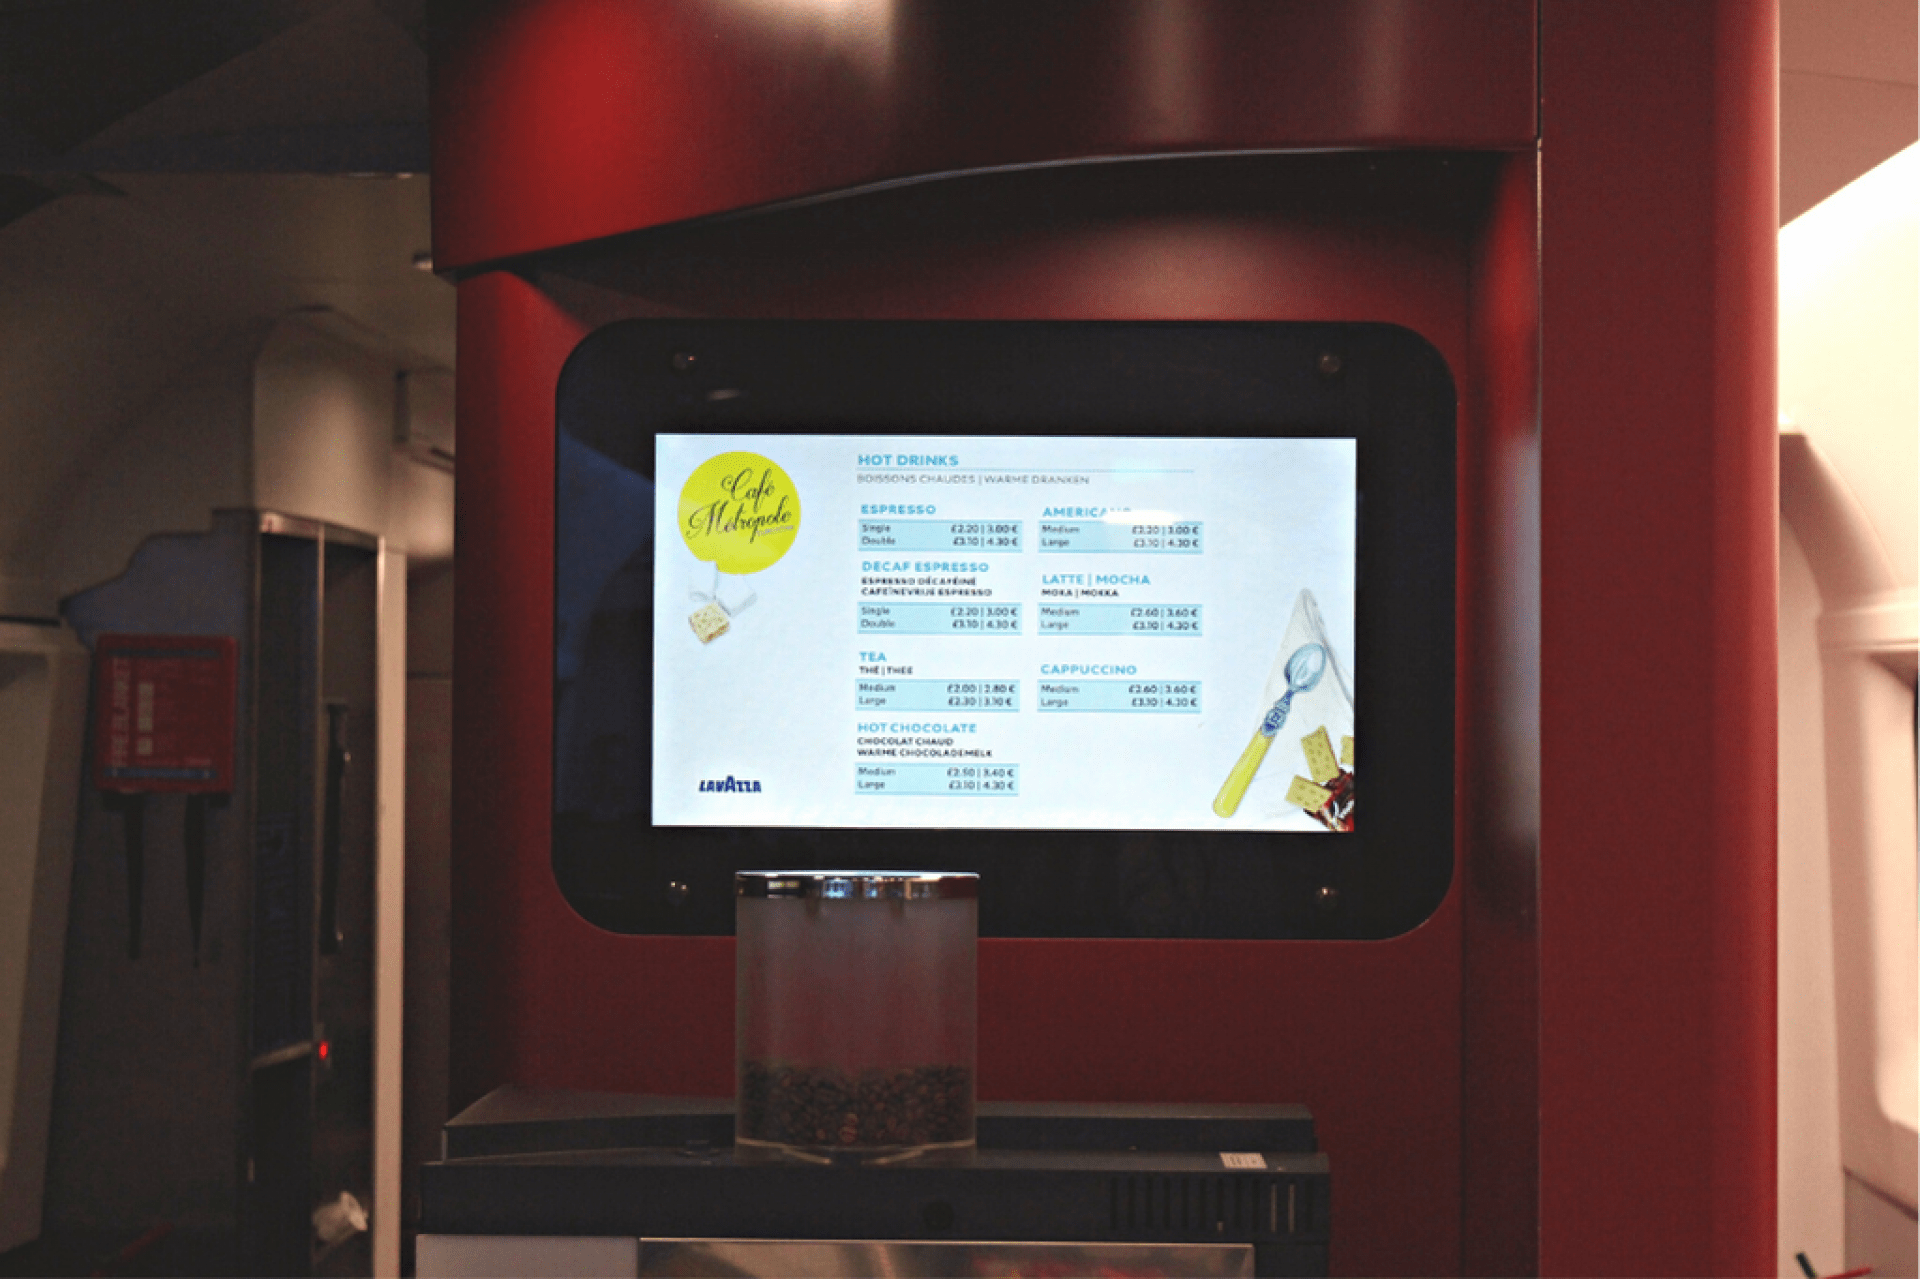 menu in advertisement in train